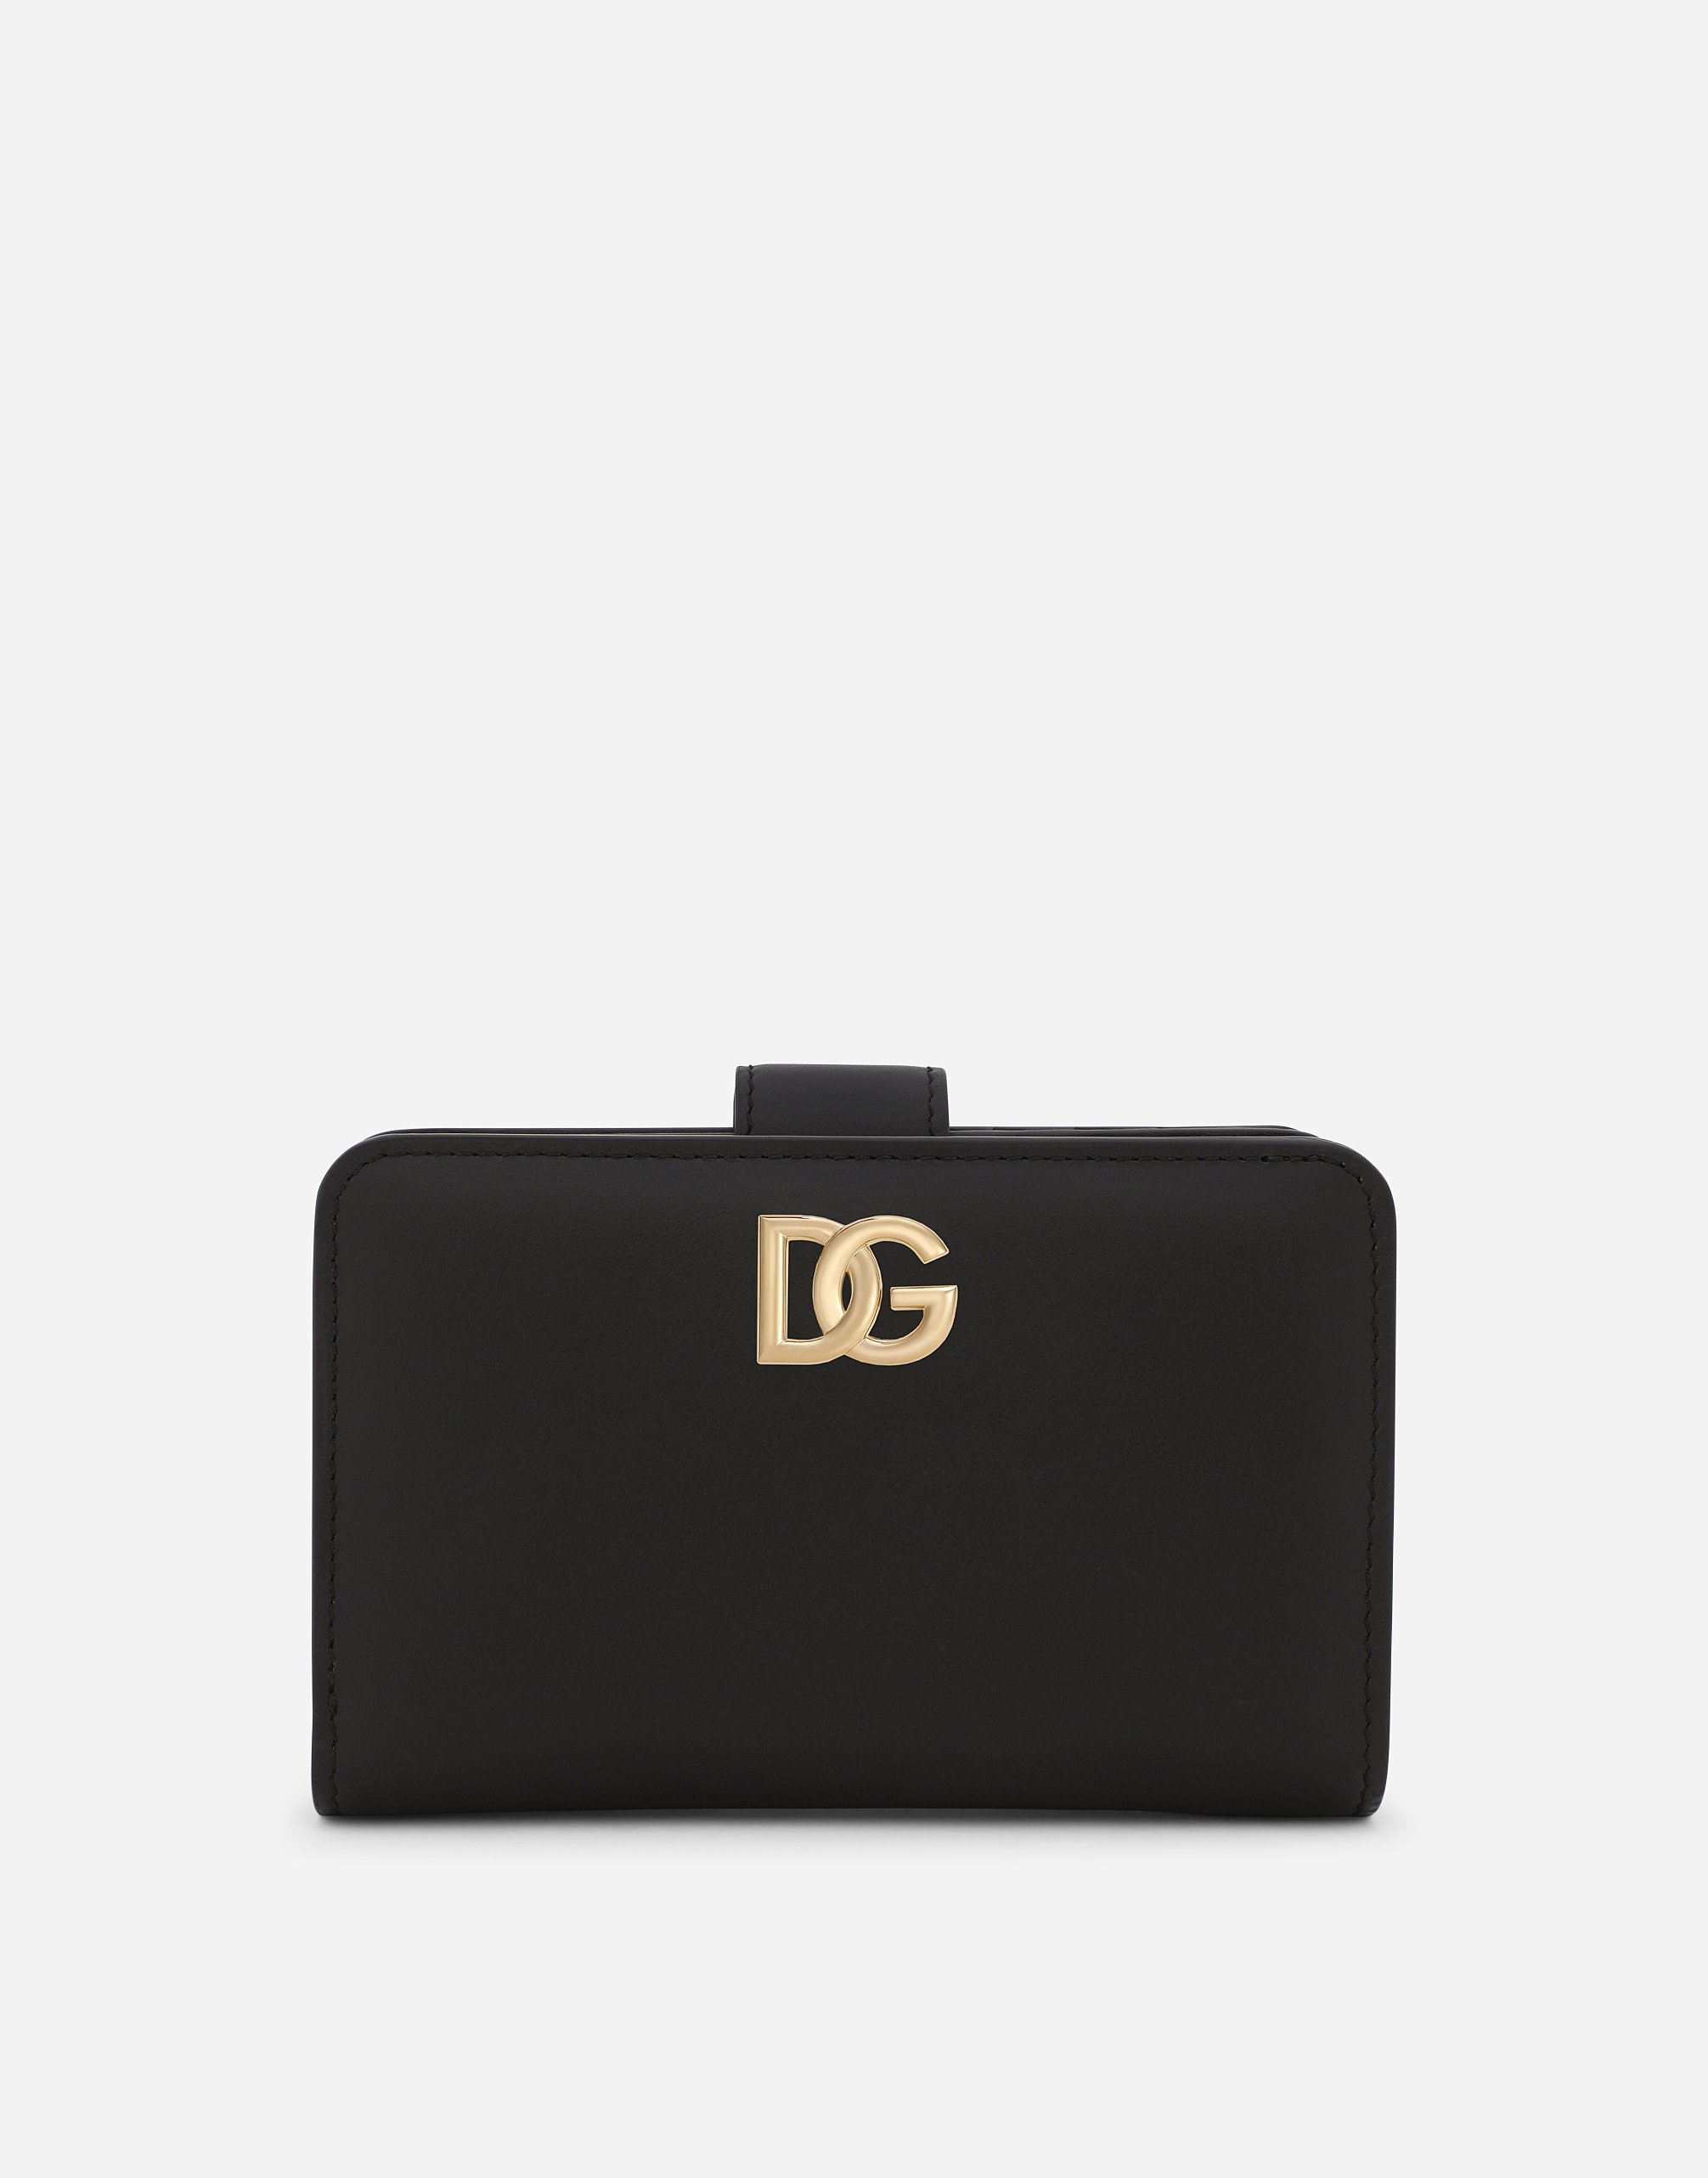 Calfskin wallet with DG logo in Black